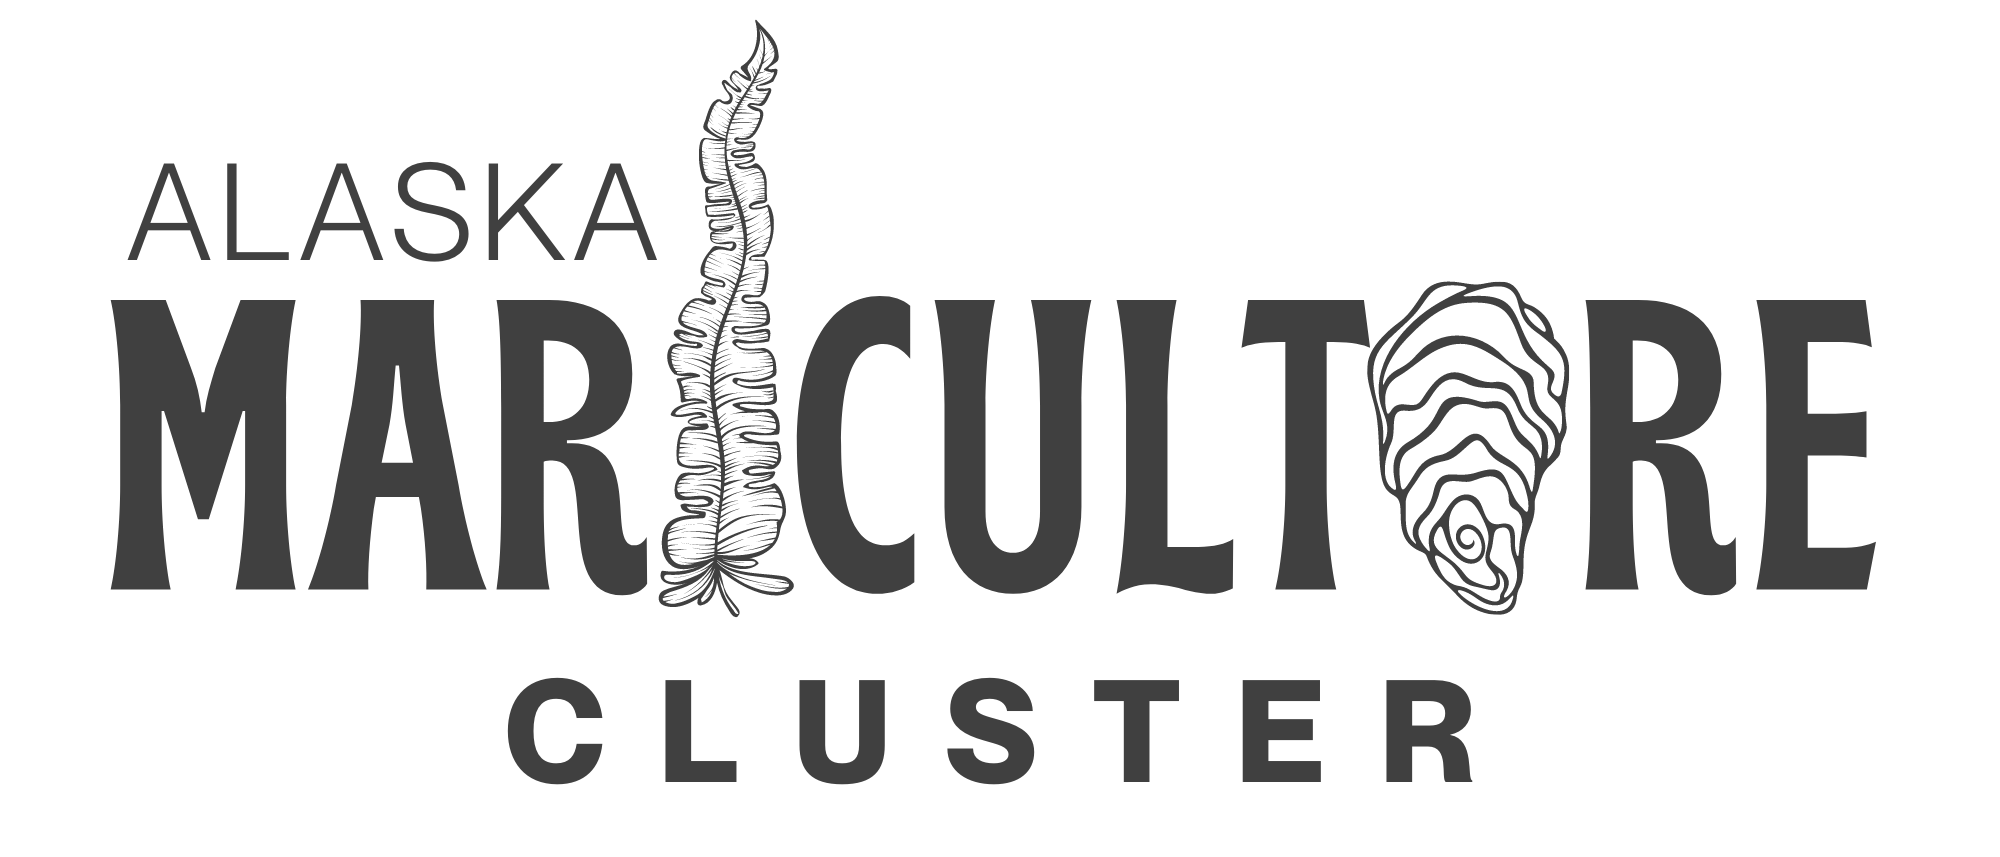 Alaska Mariculture Cluster logo